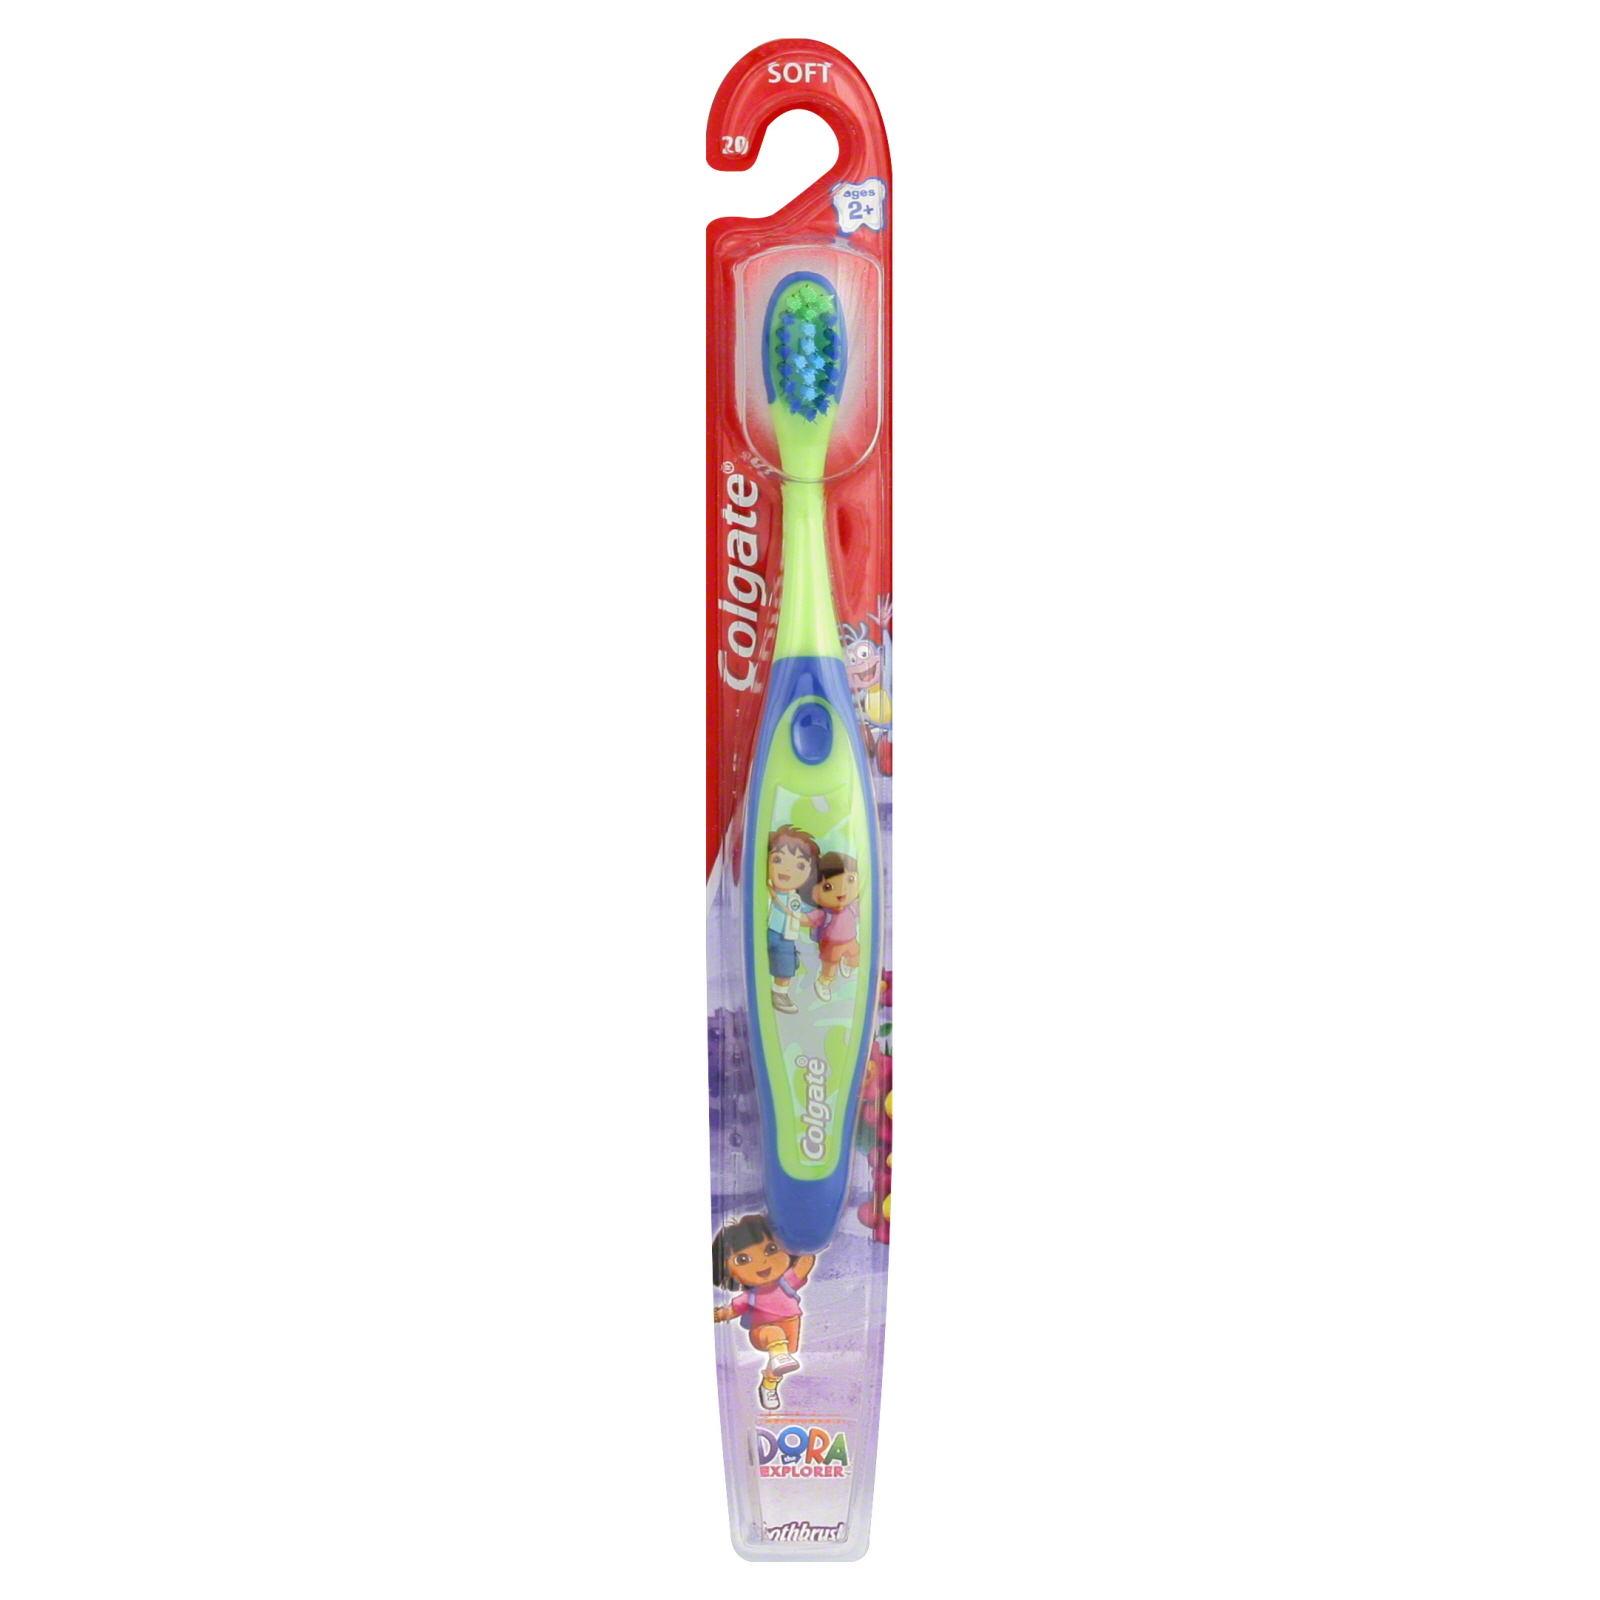 Colgate Smiles Toothbrush, Extra Soft 20, Nickelodeon Dora the Explorer, 1 toothbrush